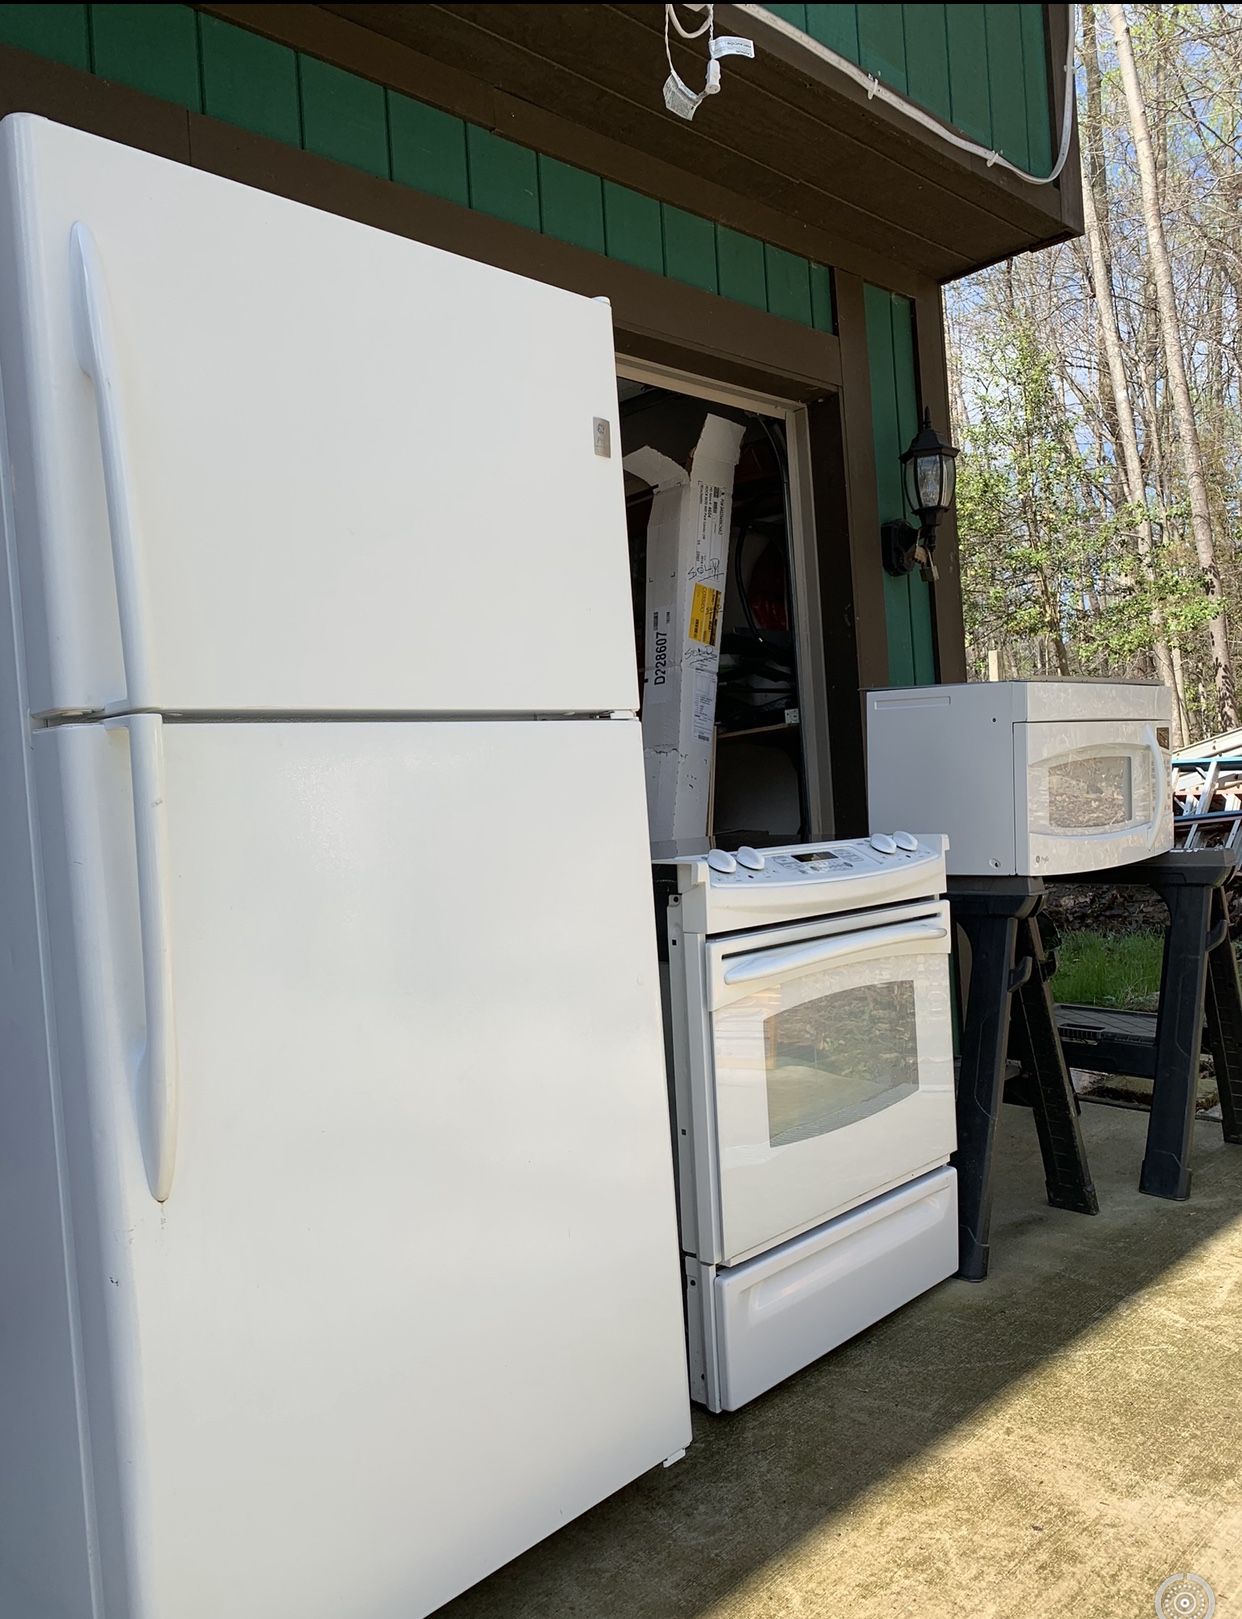 Complete kitchen set: Refrigerator, Microwave, range